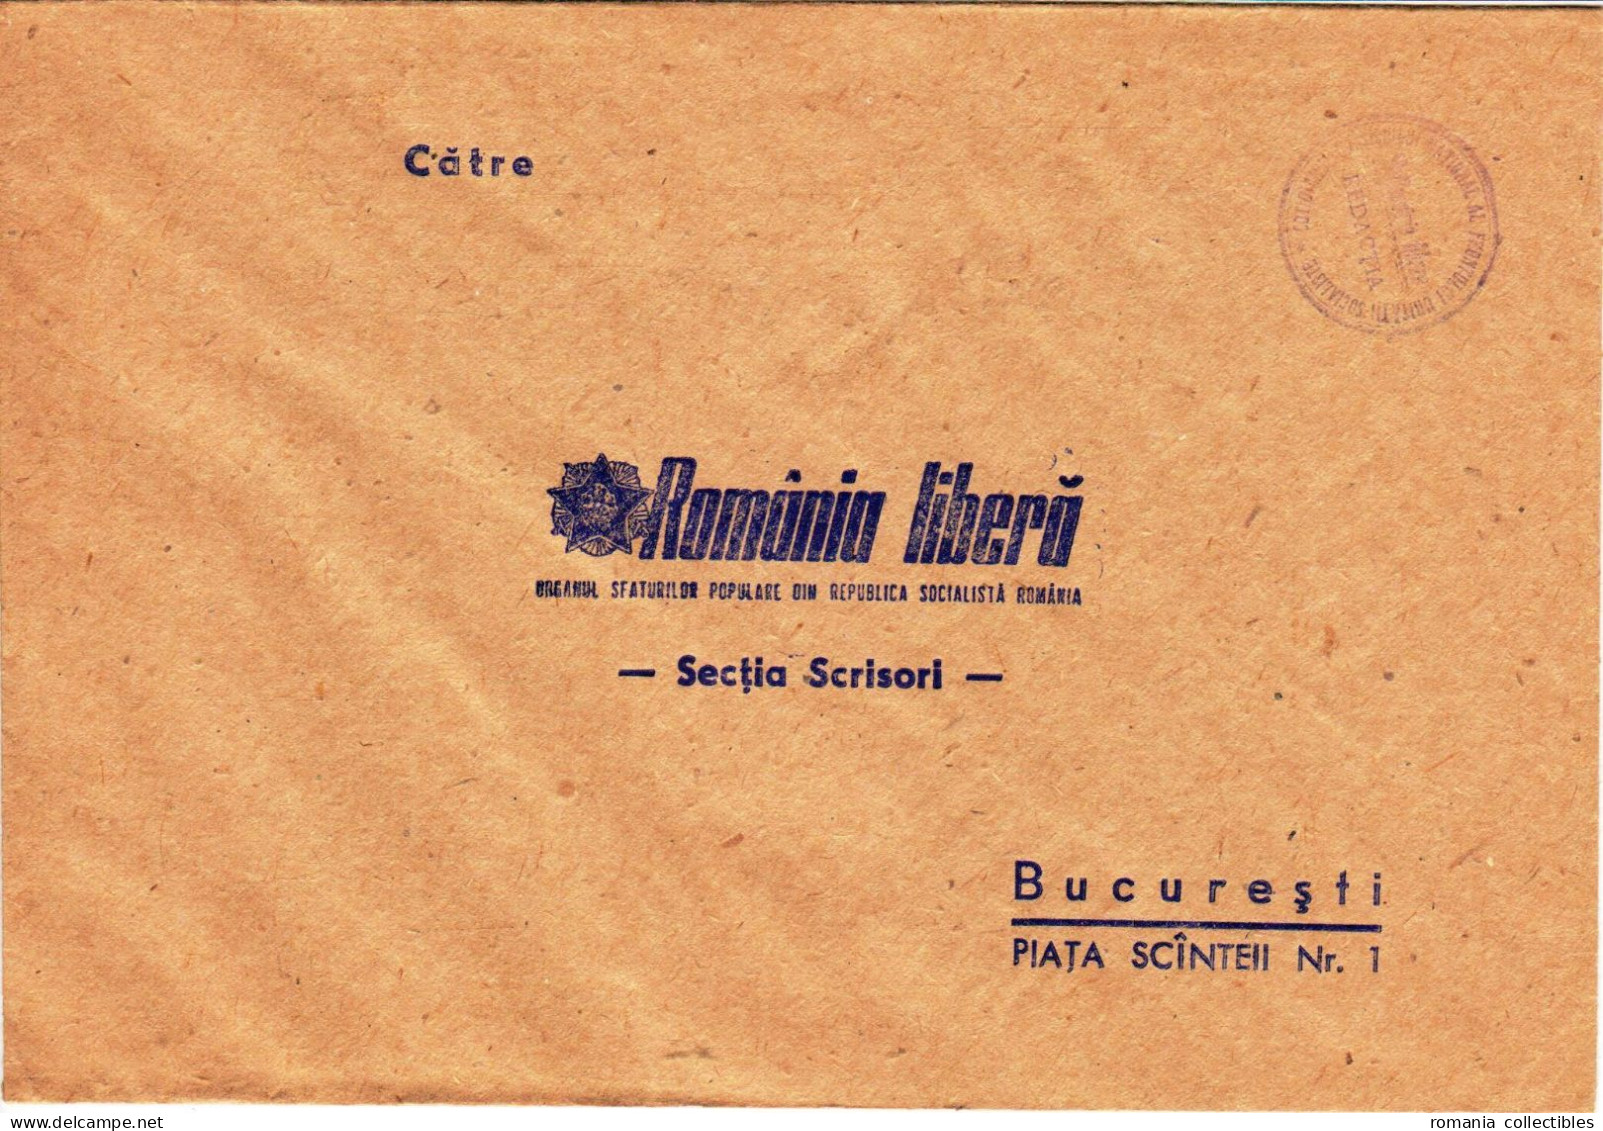 Romania, 1980's, Vintage Uncirculated Postal Cover  - "Romania Libera" Newspaper Advertising - Oficiales